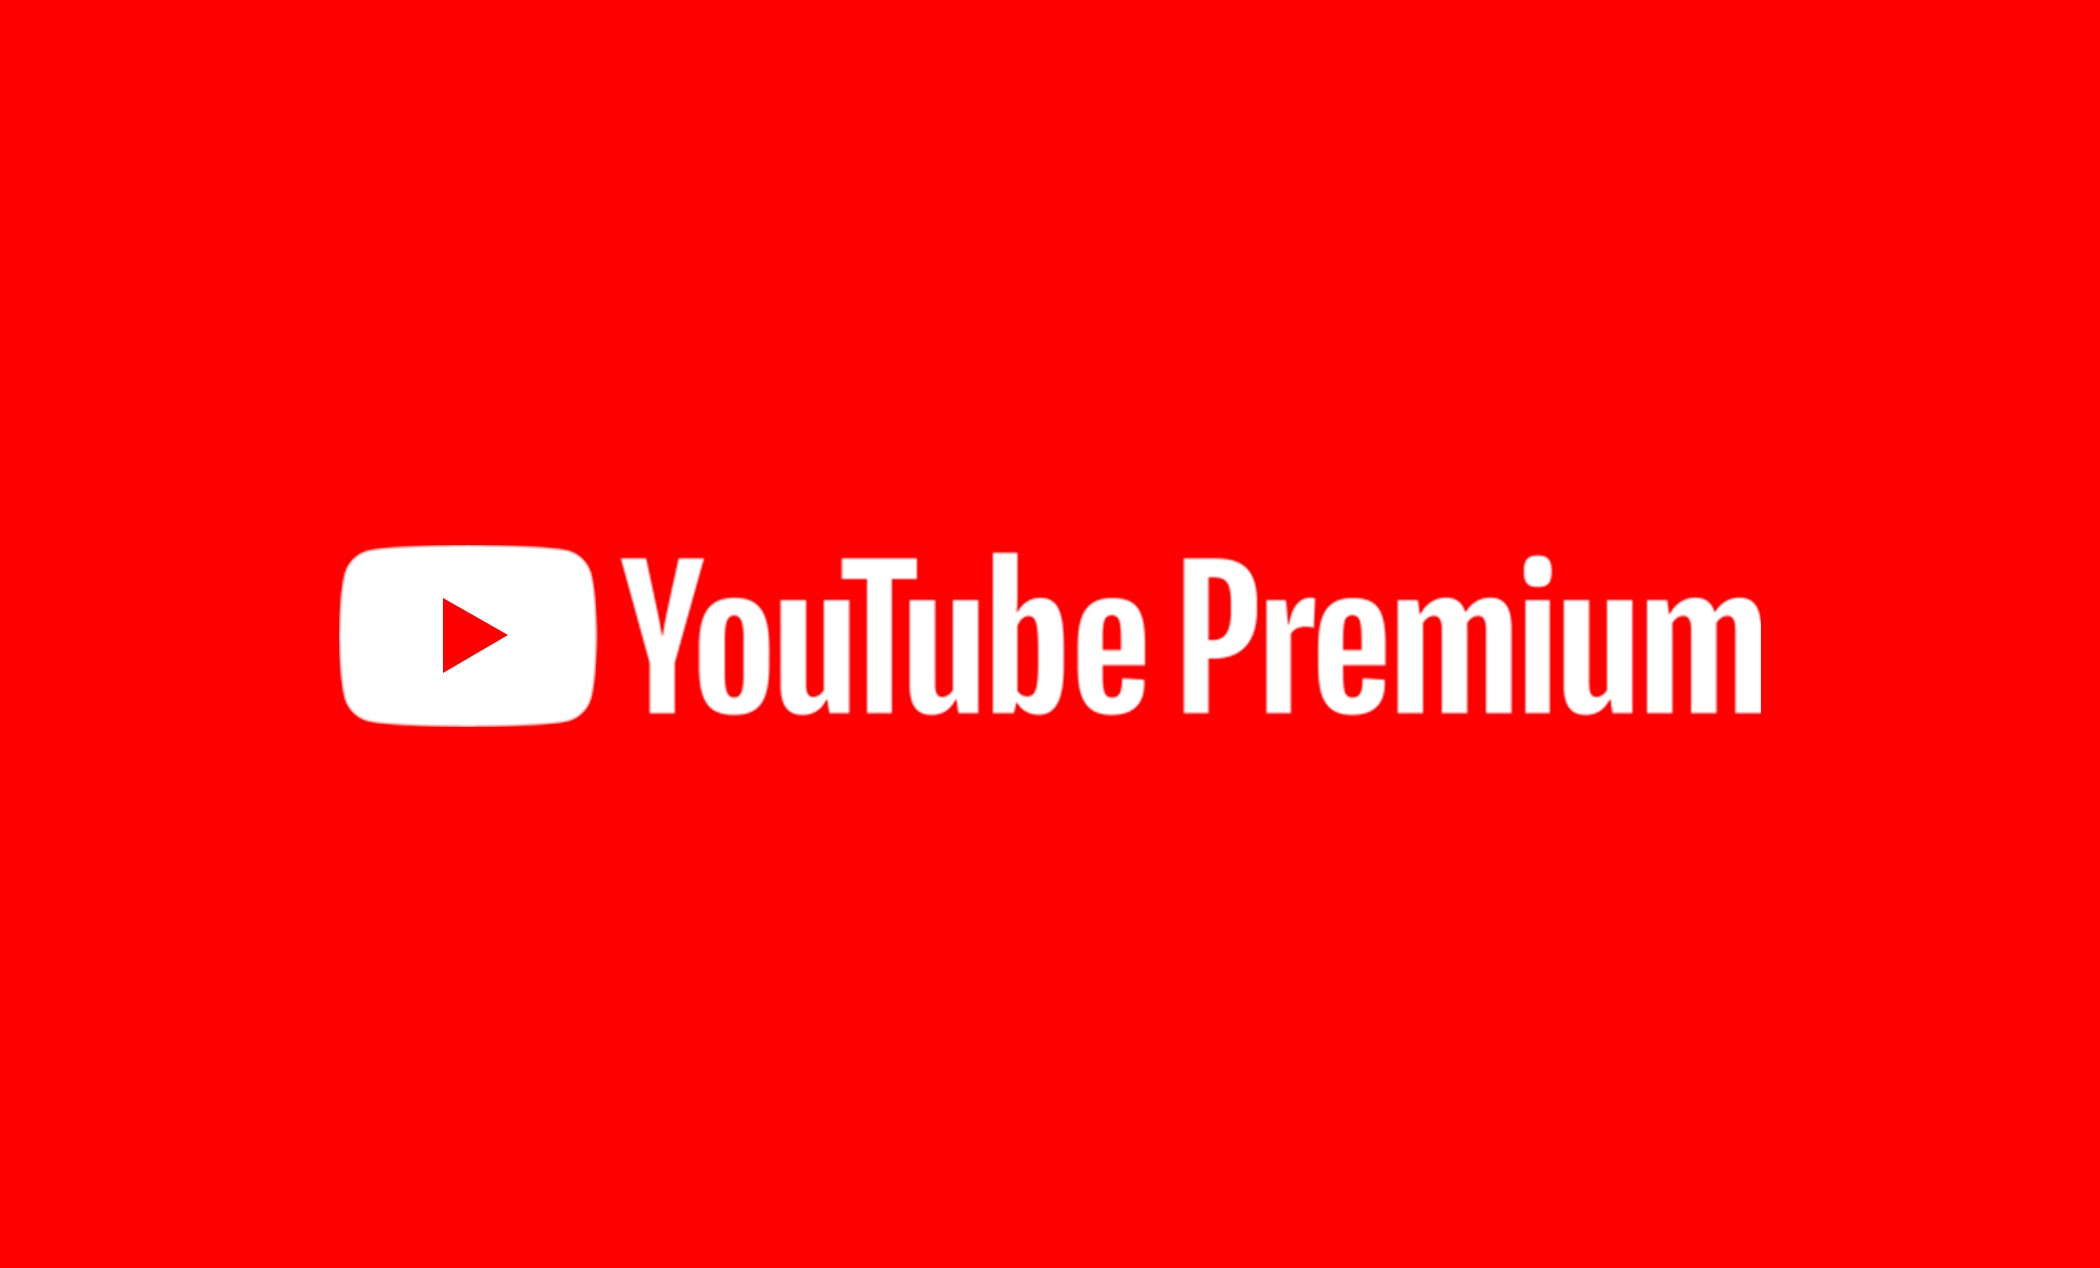 YouTube Premium logo over red background